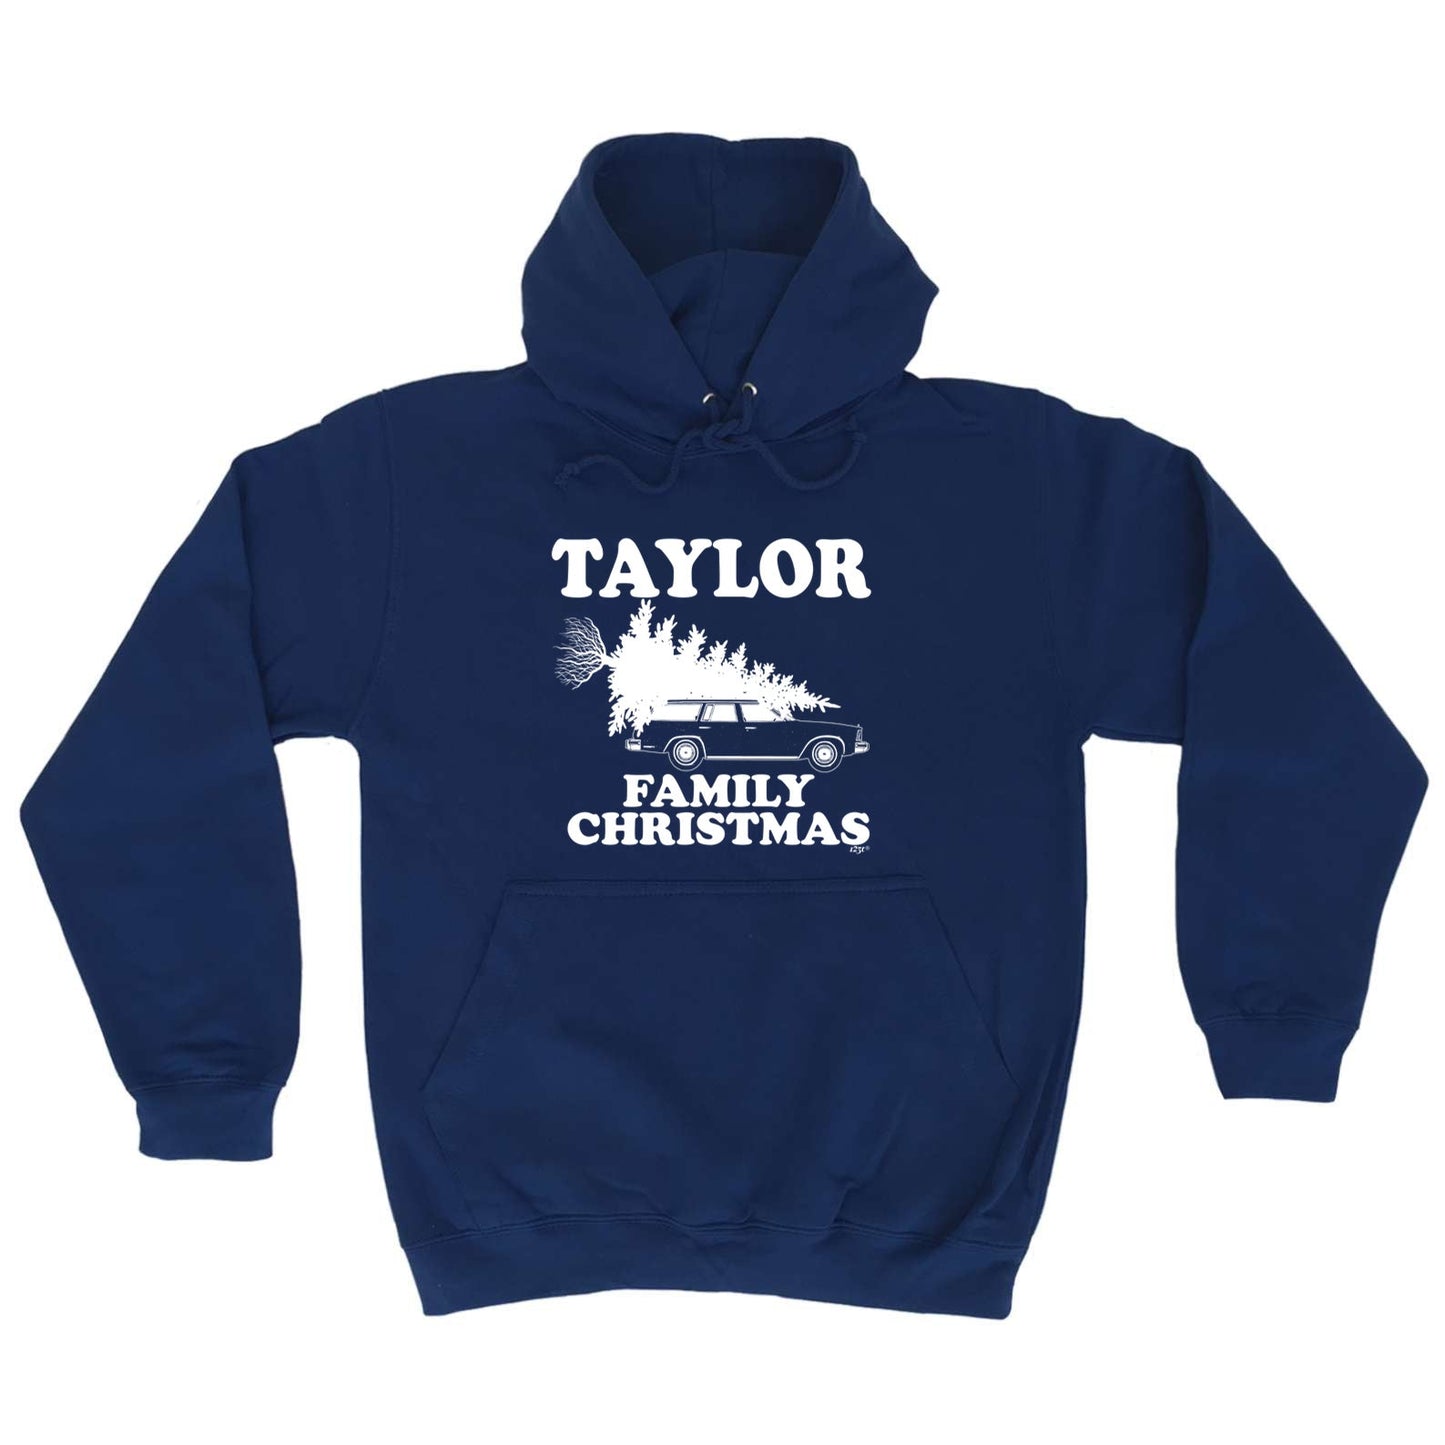 Family Christmas Taylor - Xmas Novelty Hoodies Hoodie